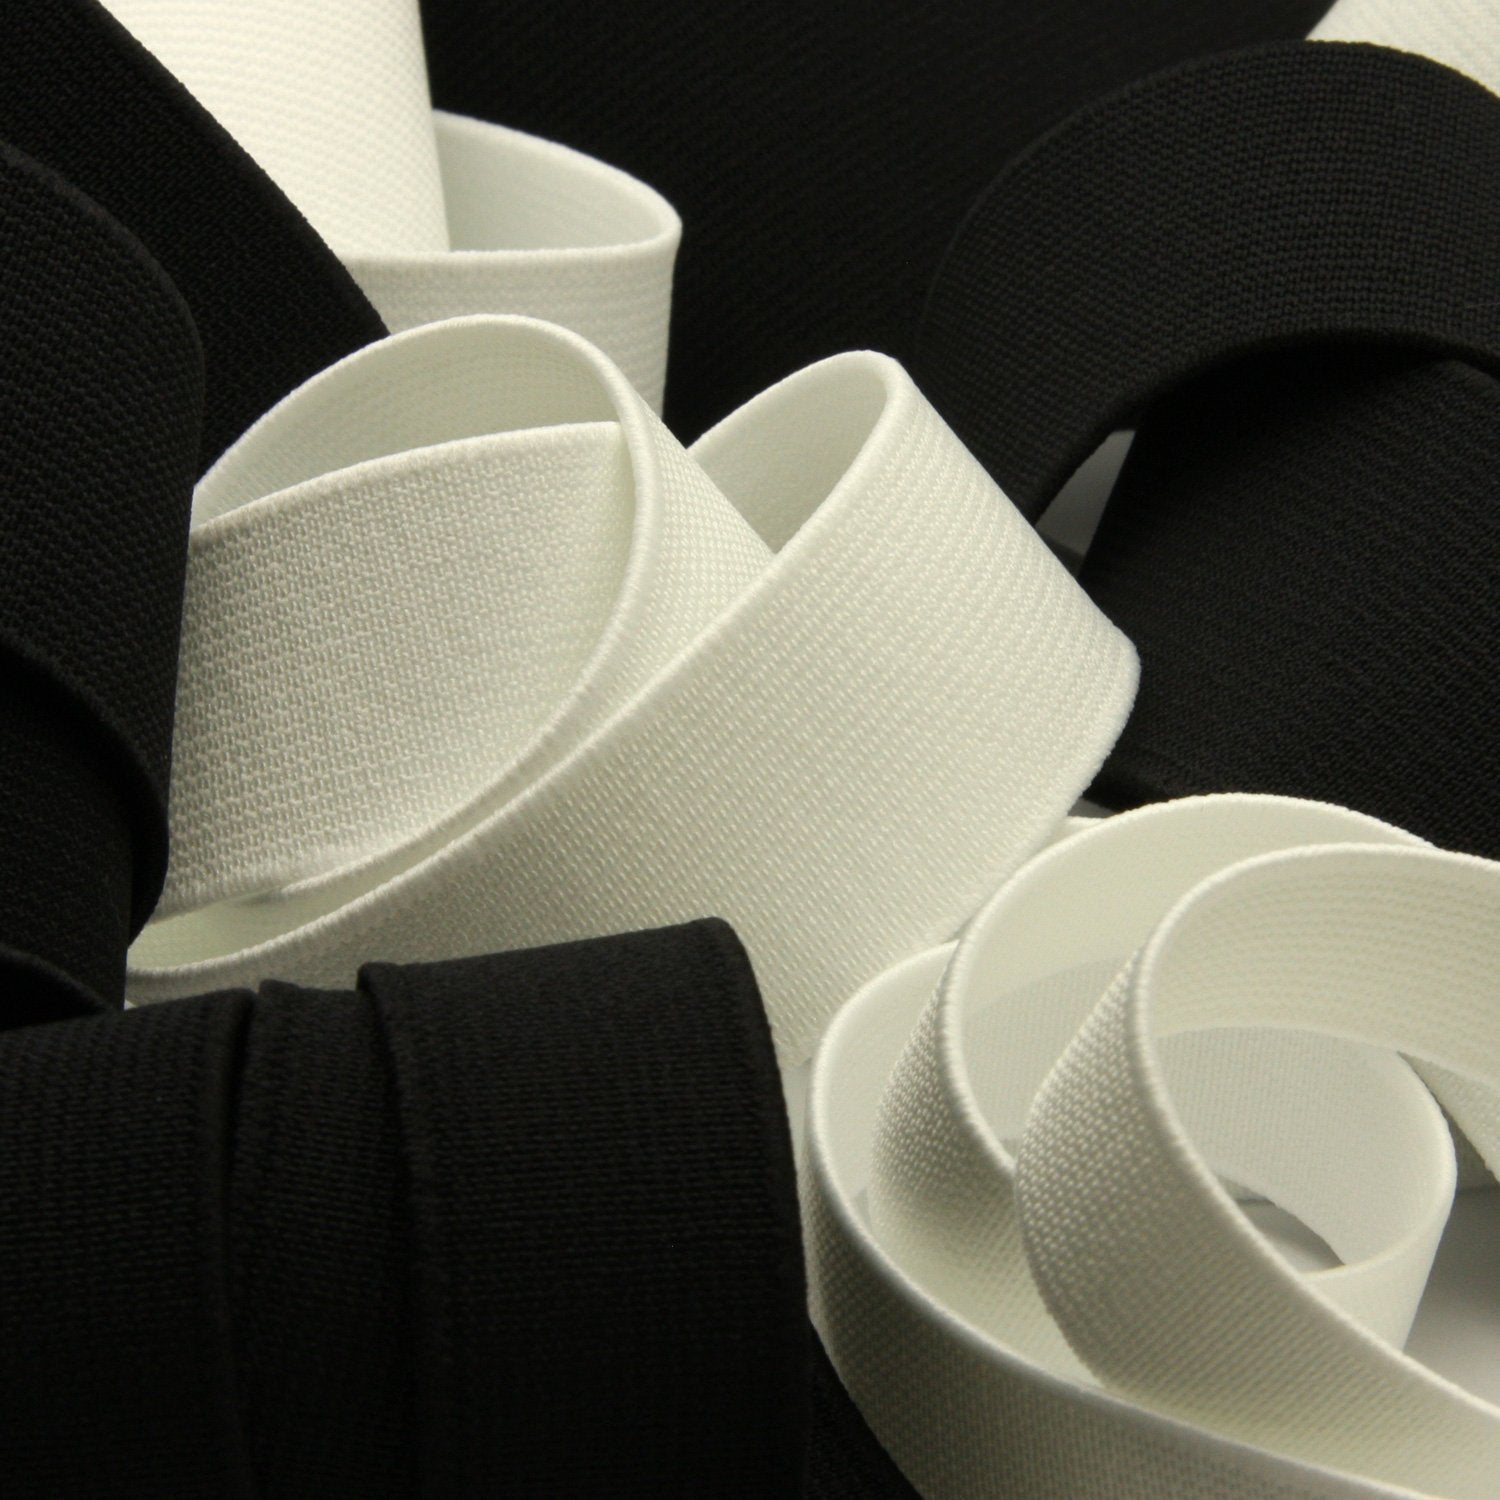 FUJIYAMA RIBBON [Wholesale] Soft Type Inside Belt 15mm 30 Meters Roll Off White